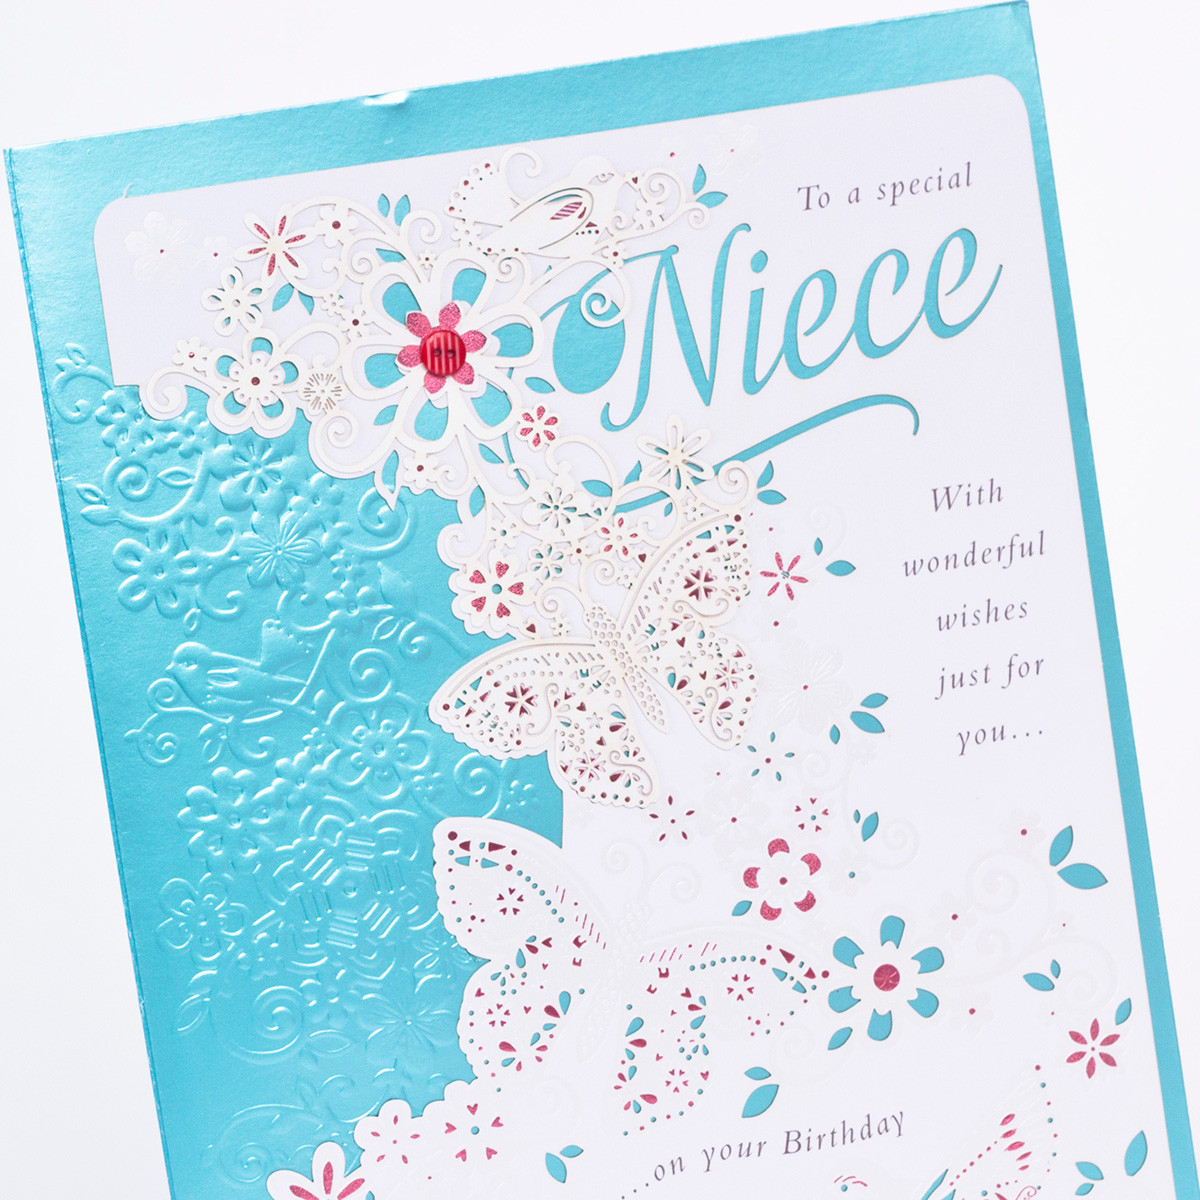 Niece Birthday Cards
 22 Ideas for Niece Birthday Cards Home Family Style